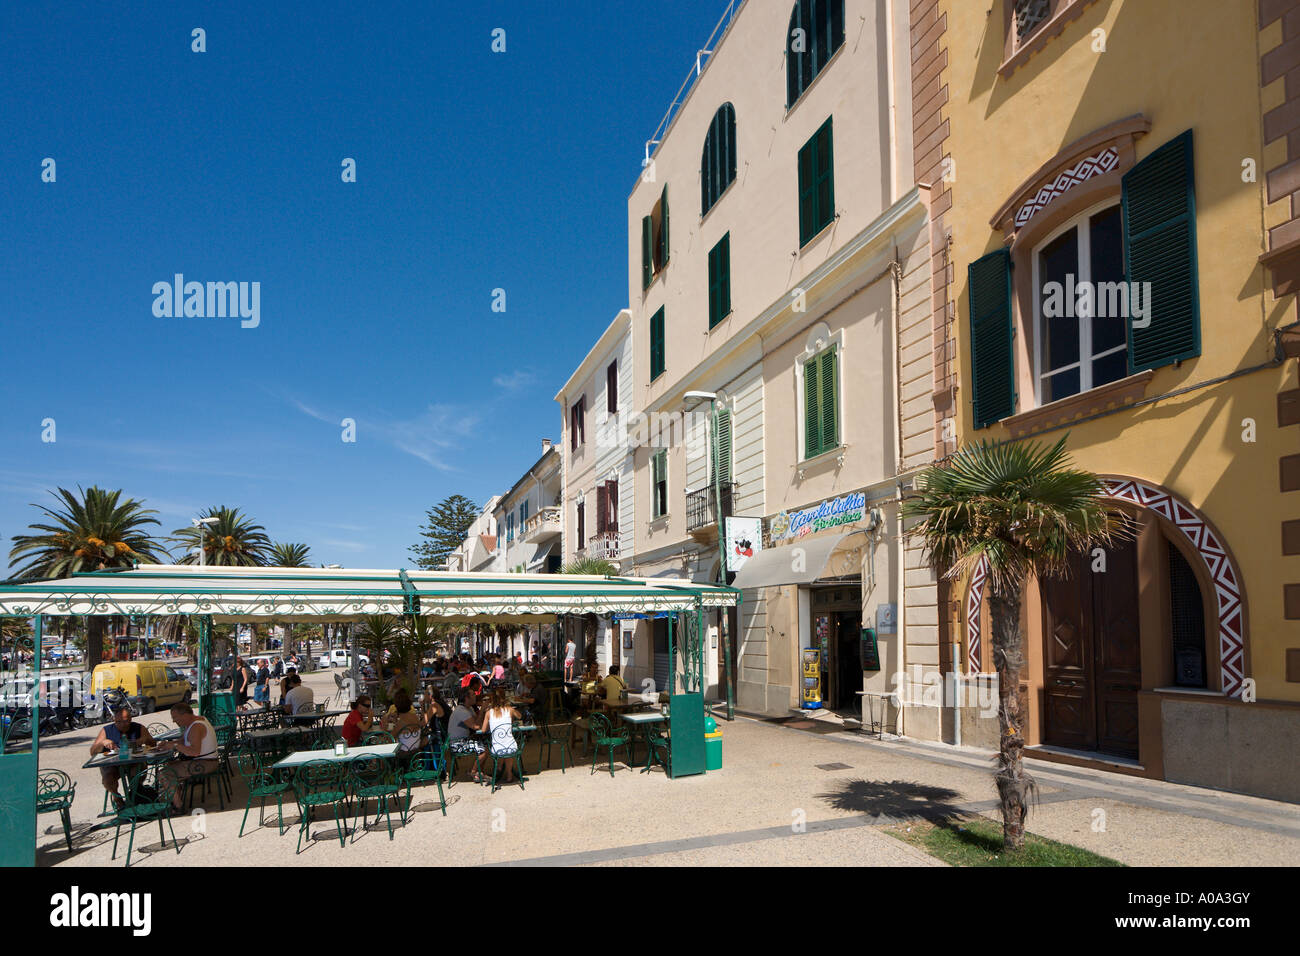 Restaurant en bord de mer, Alghero, Sardaigne, Italie Banque D'Images